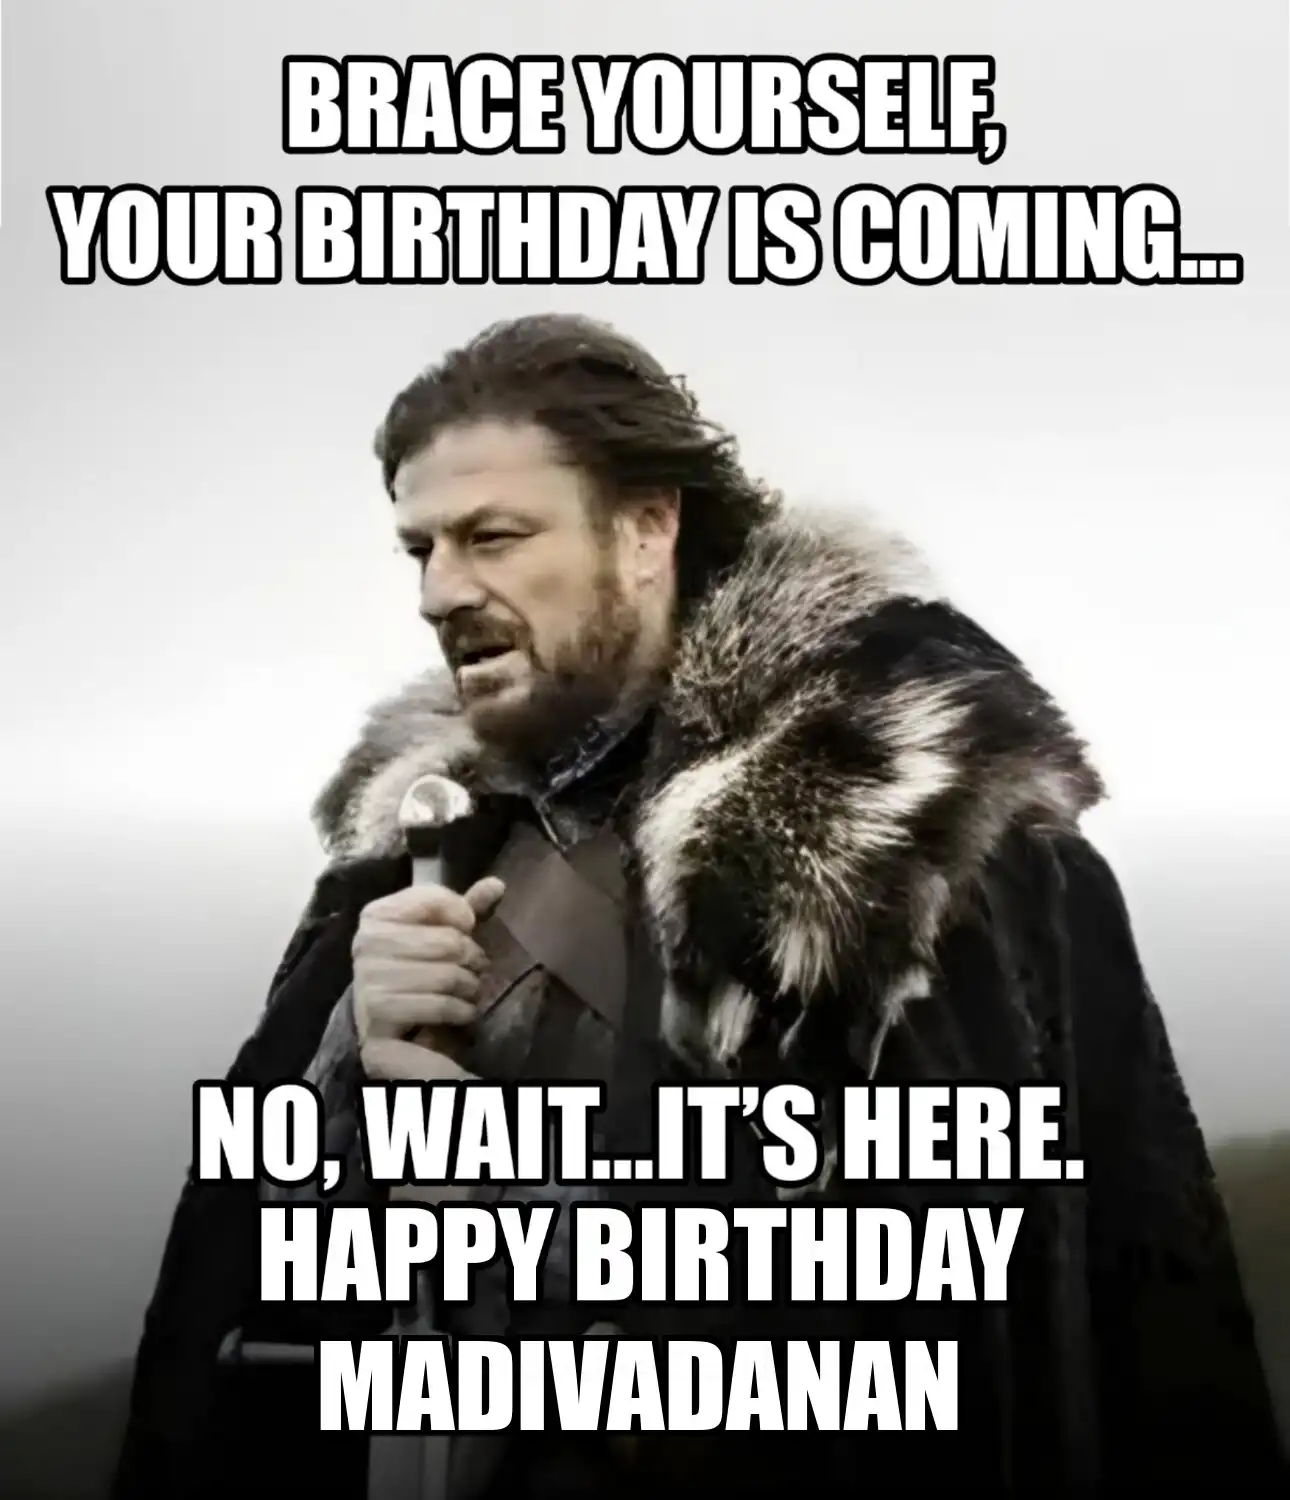 Happy Birthday Madivadanan Brace Yourself Your Birthday Is Coming Meme